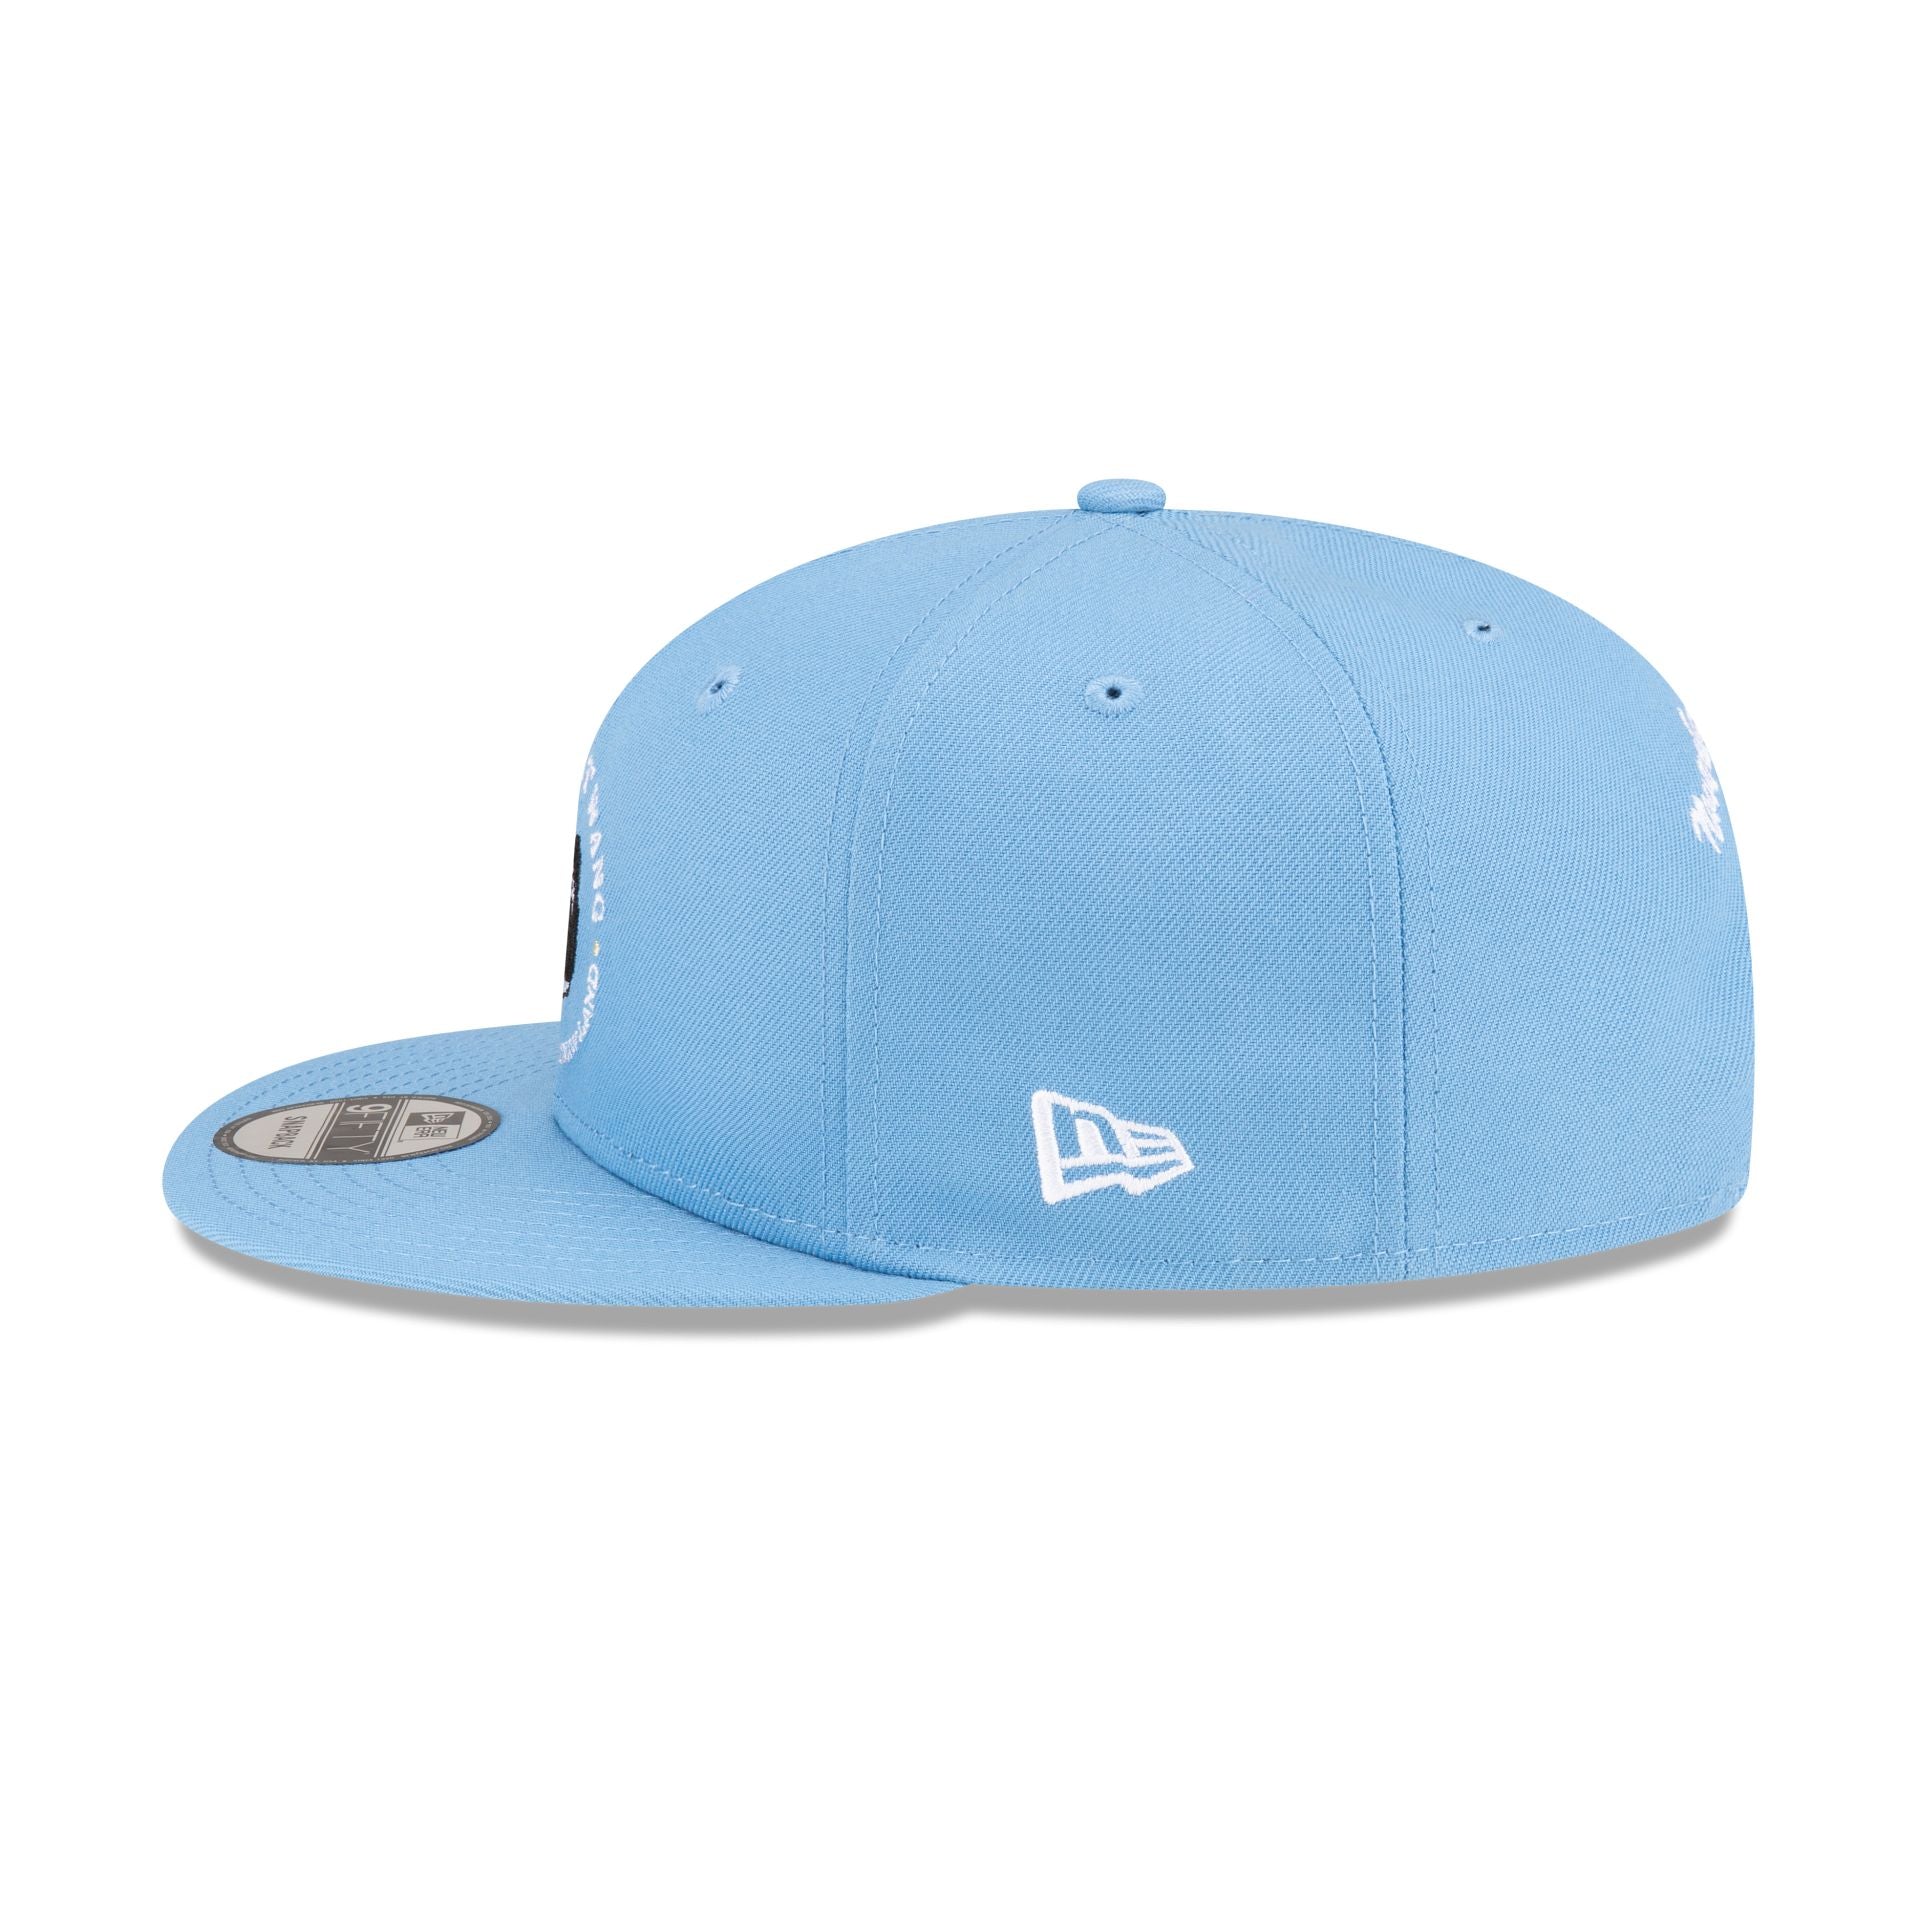 Camp Flog Gnaw Blue 9FIFTY Snapback Hat – New Era Cap